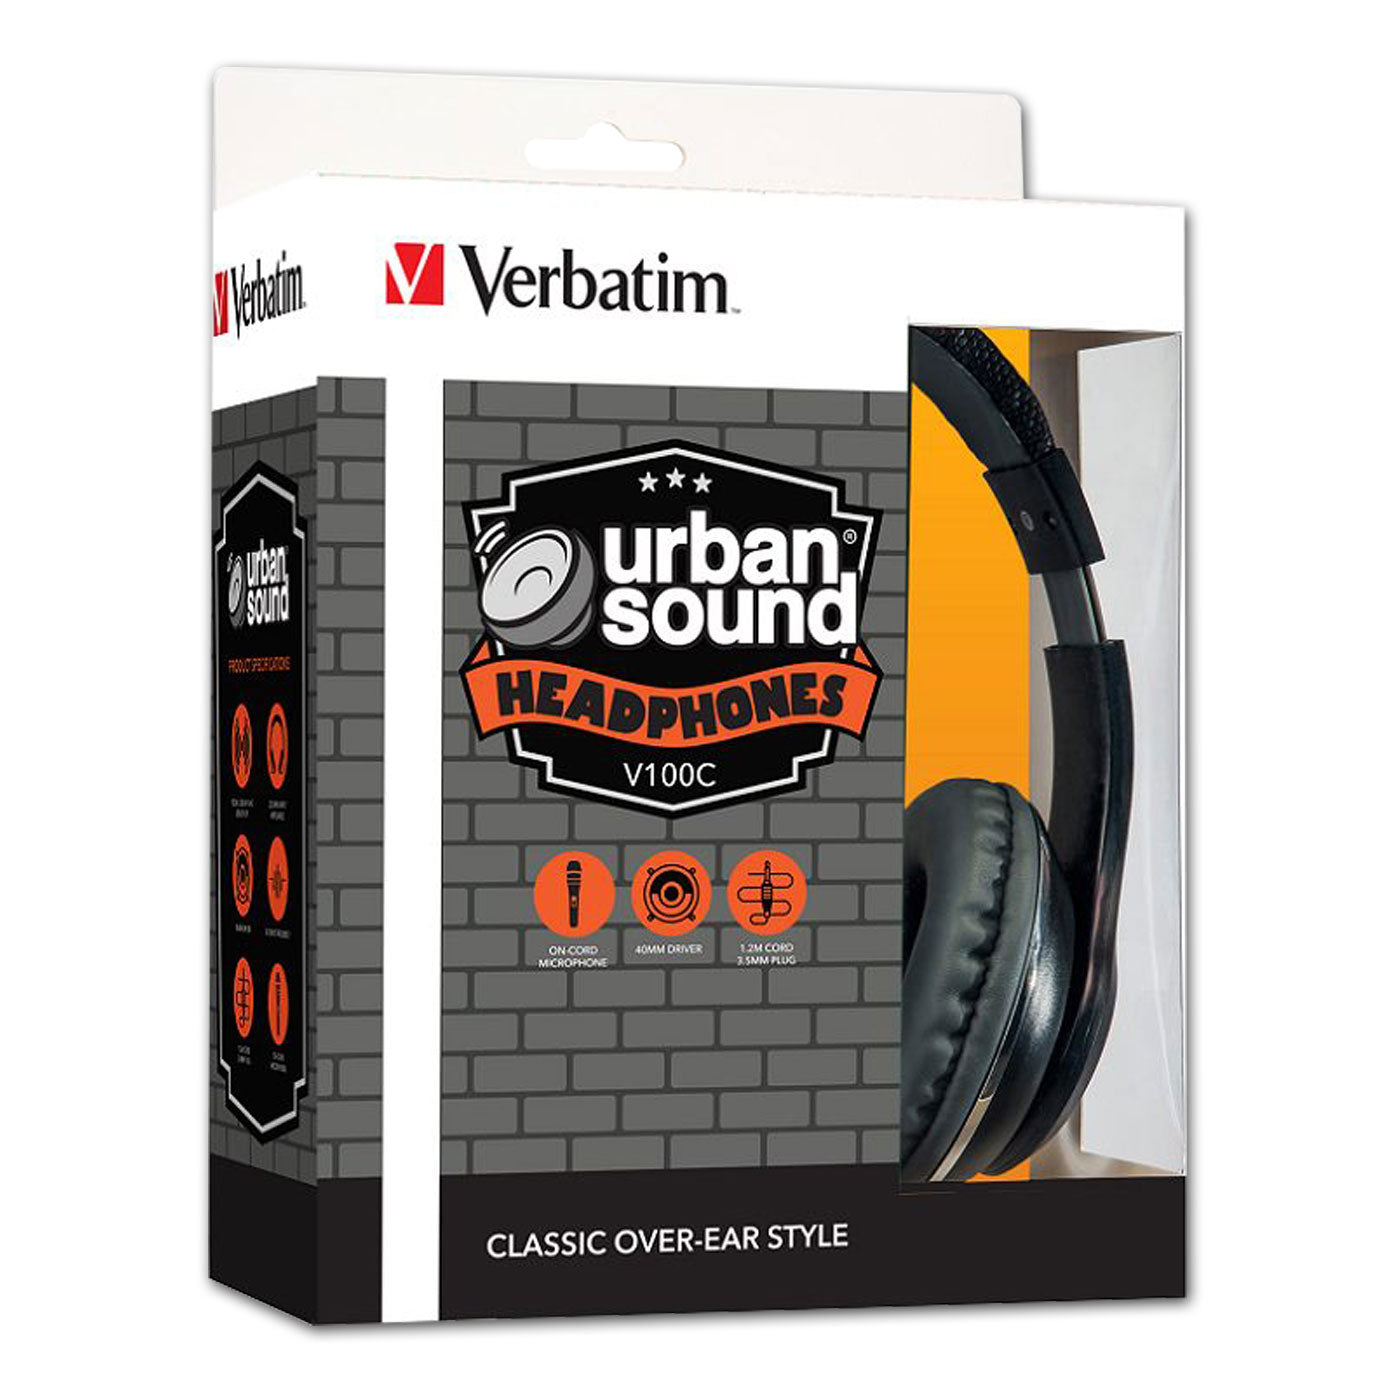 Verbatim Stereo Headphones Urban Sound V100C with Mic Black